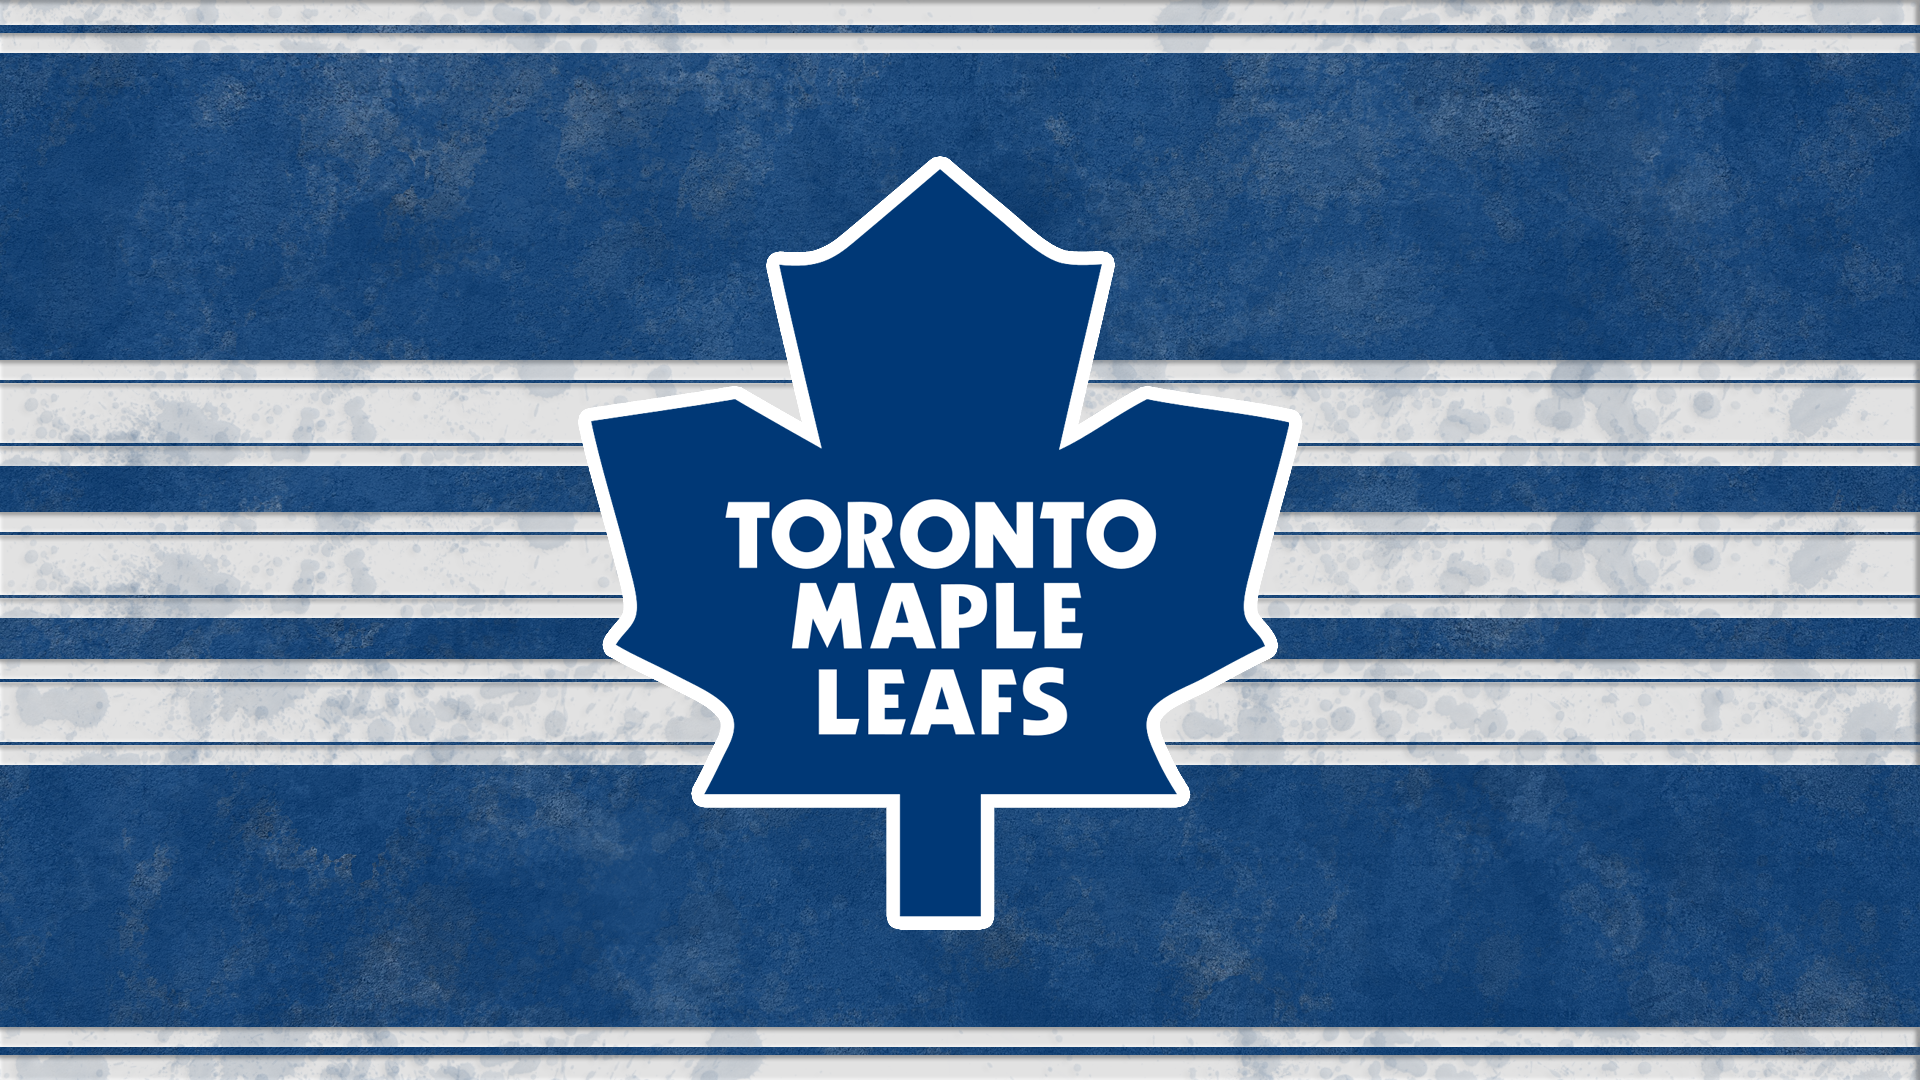 Toronto Maple Leafs Wallpaper - Imgur